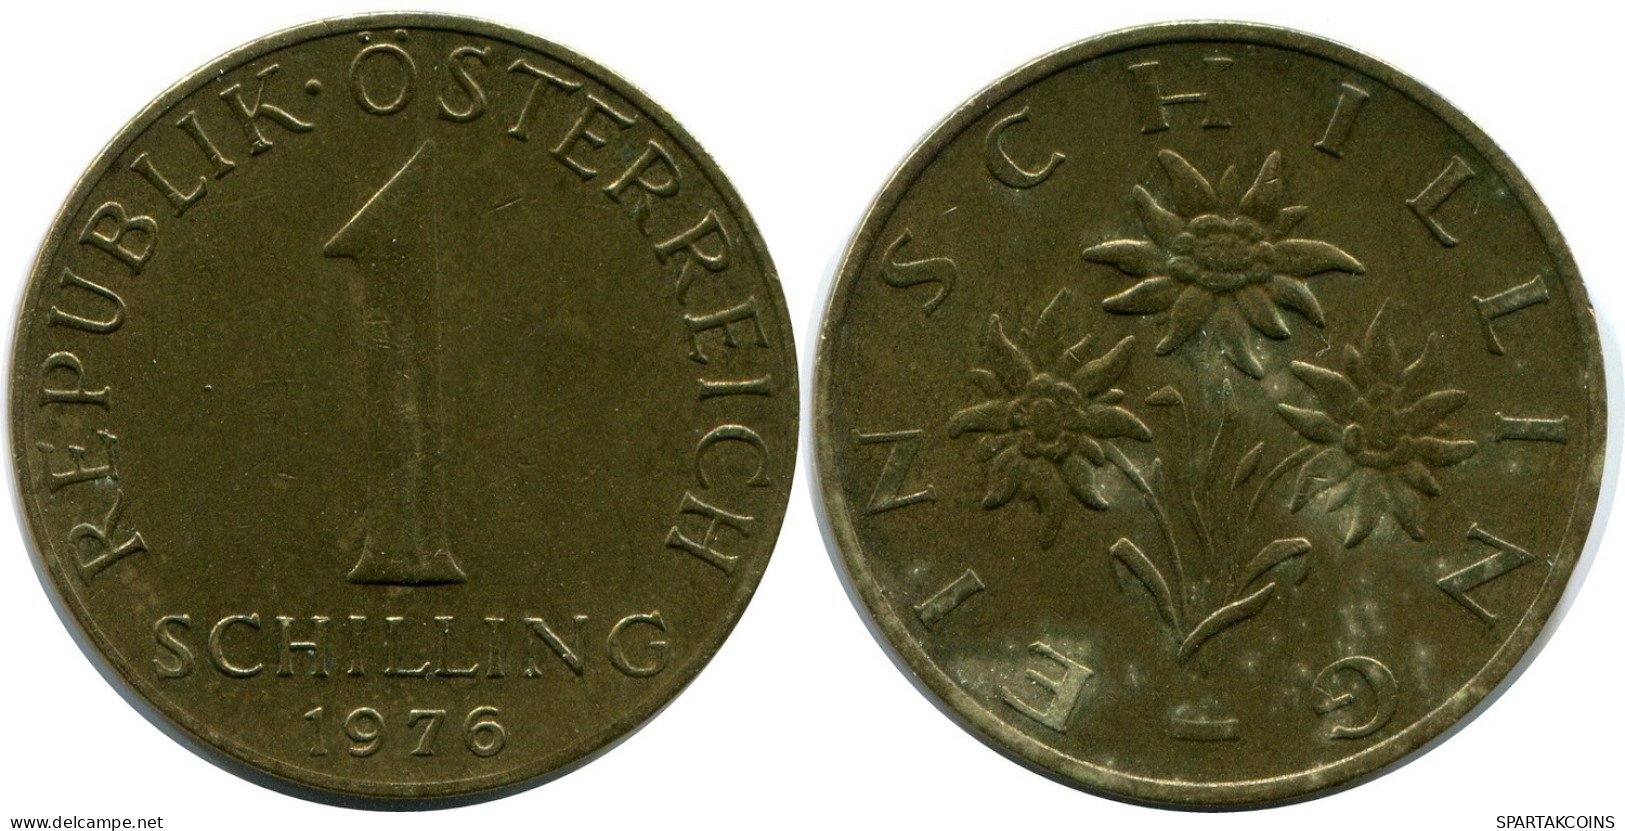 1 SCHILLING 1976 AUSTRIA Coin #AW811.U.A - Austria